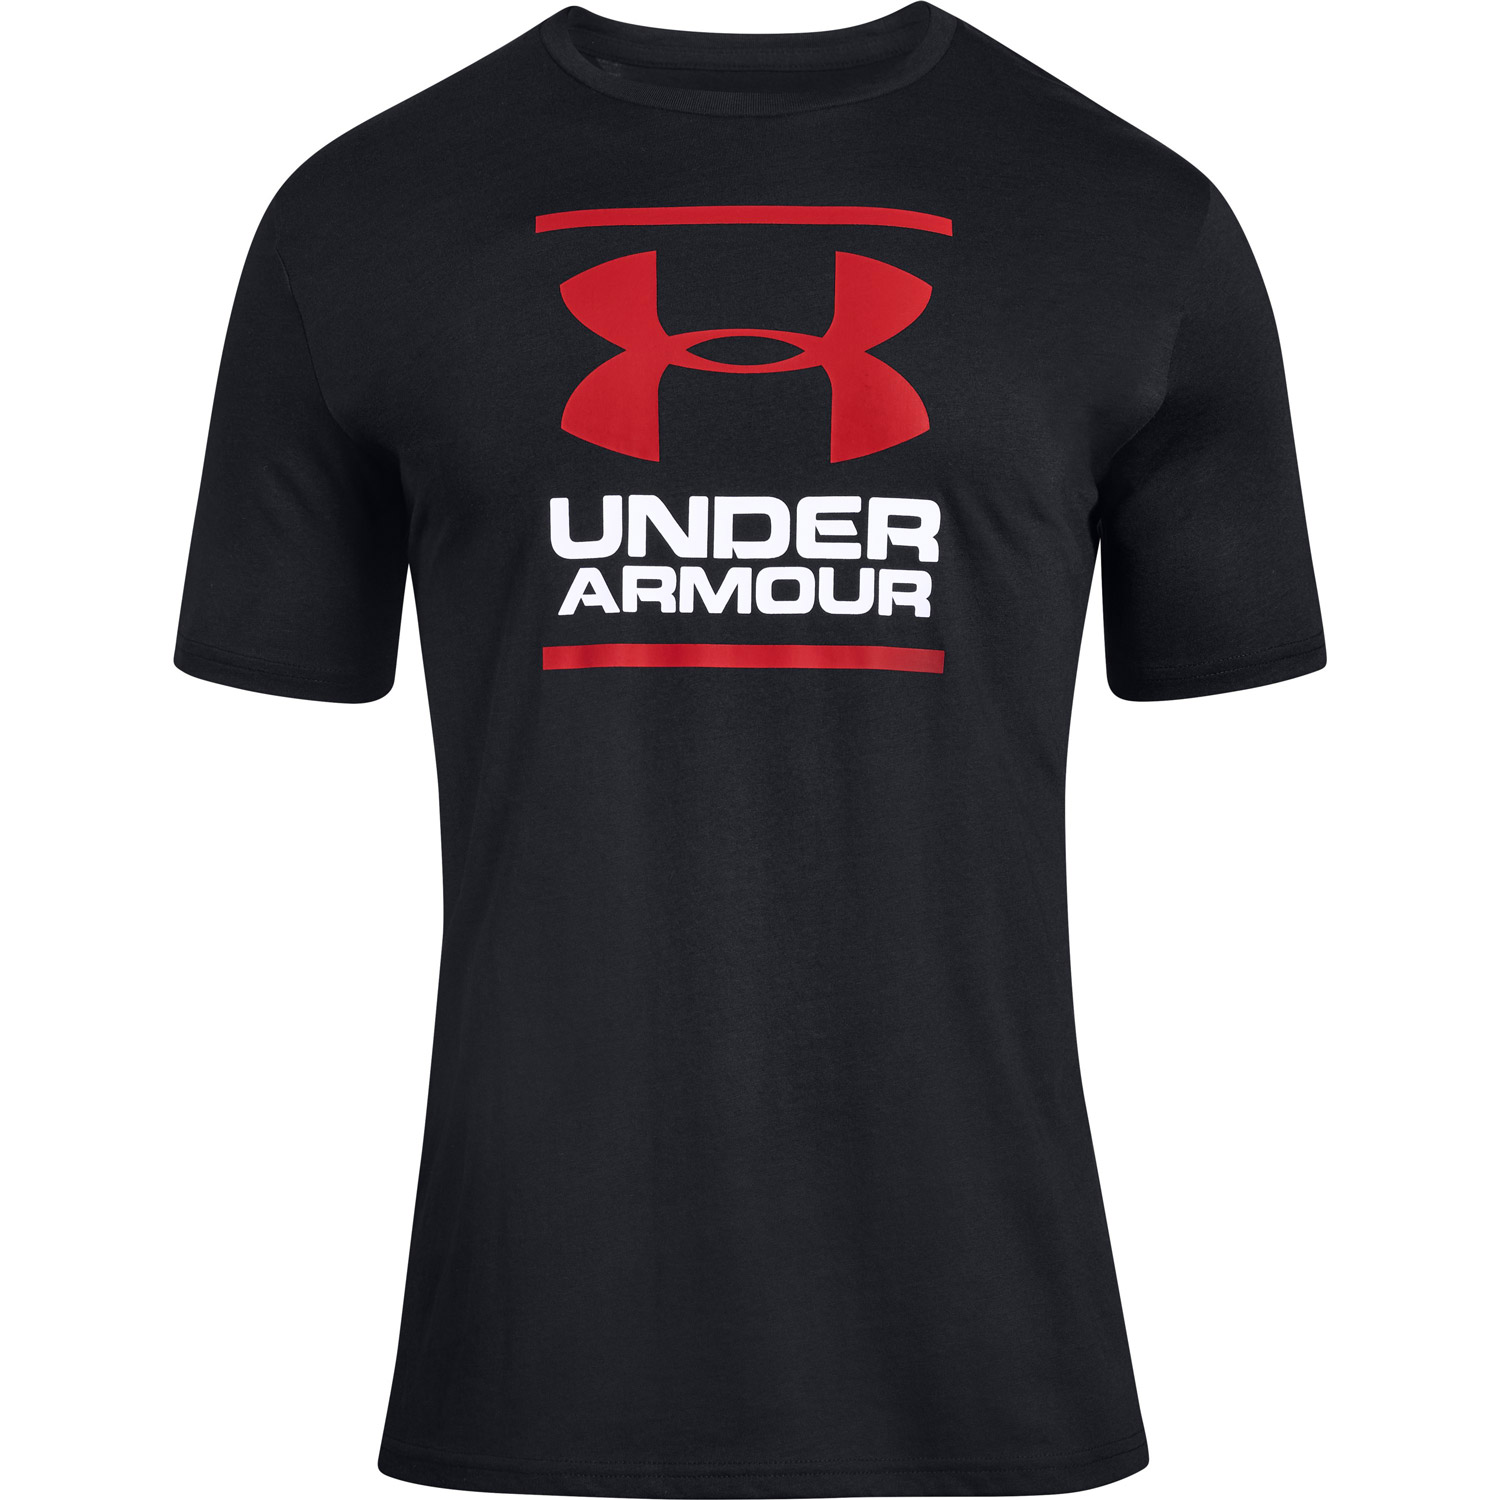 Foundation Men's Tennis T-Shirt - Black/Red